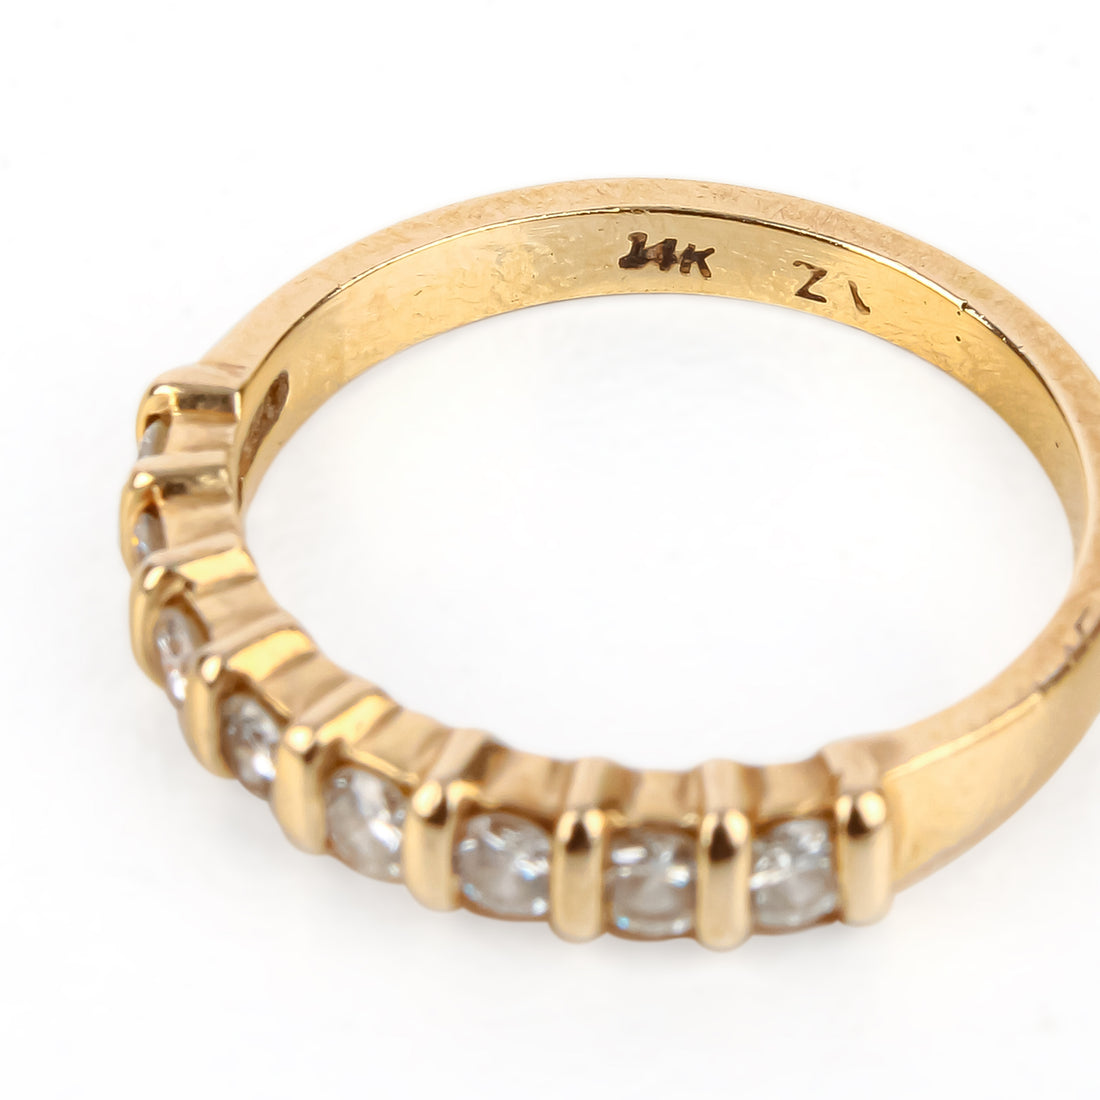 14K Yellow Gold Diamond Half-Band Ring